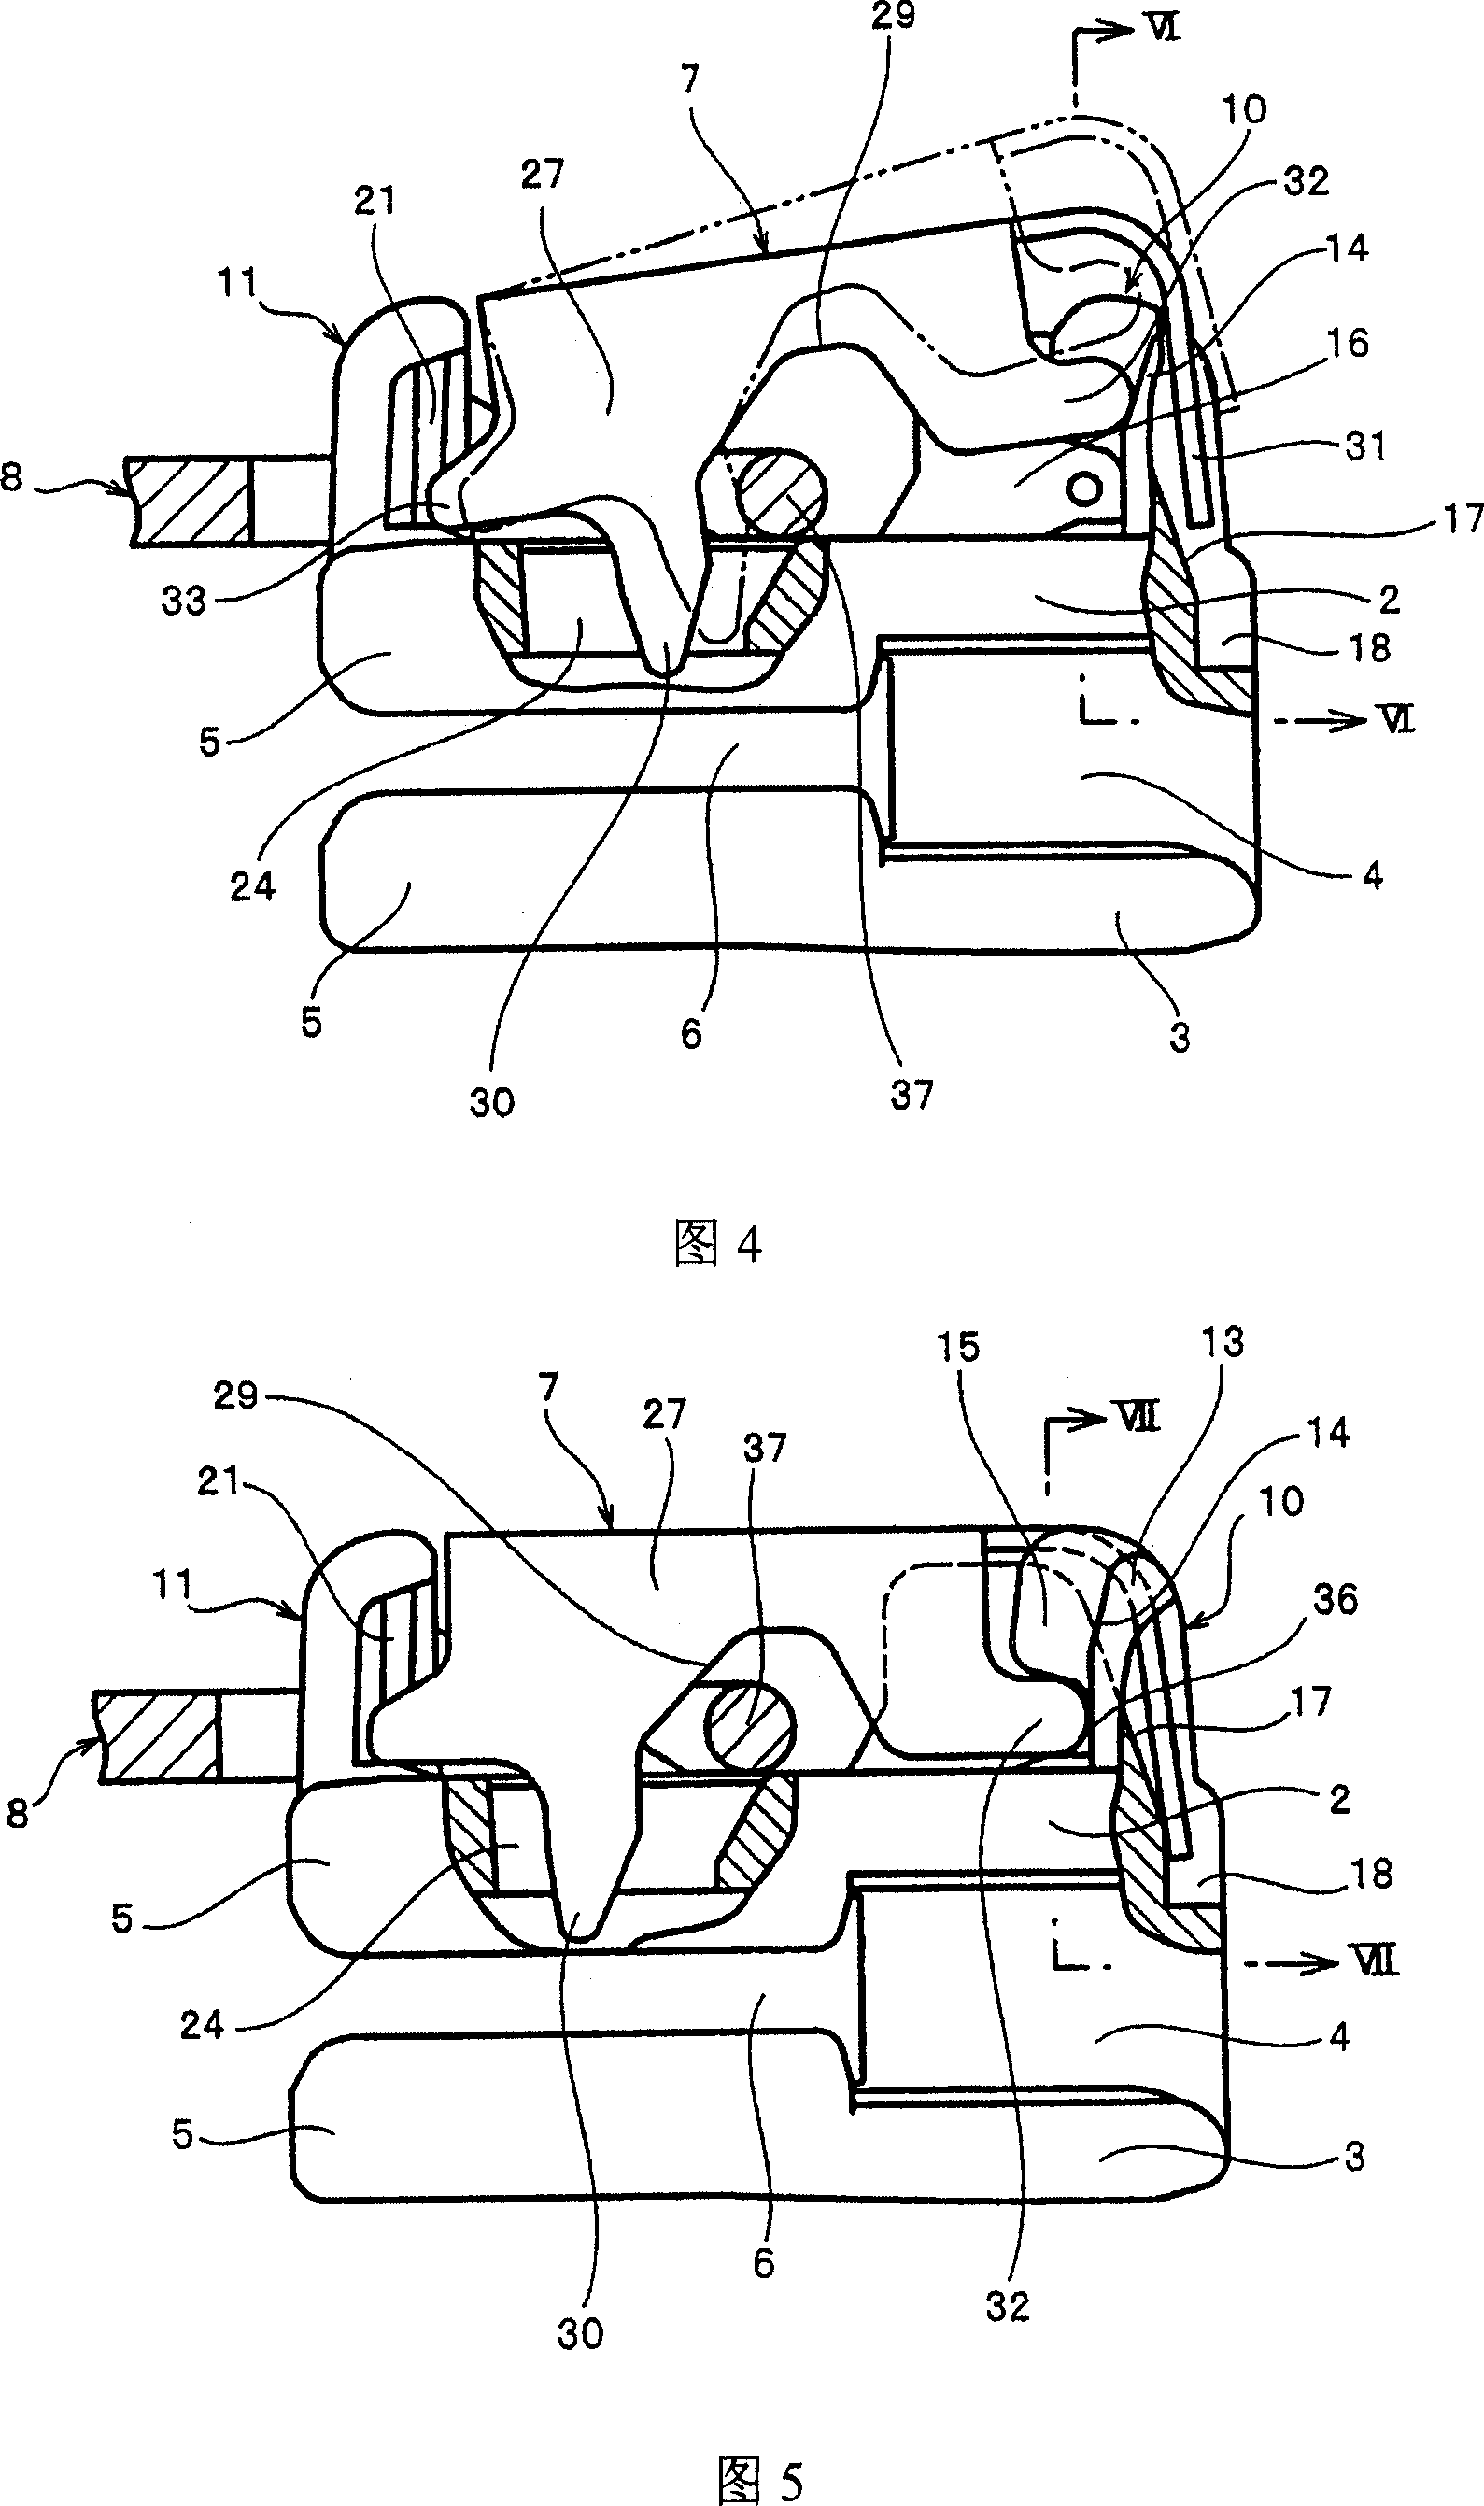 Slide fastener slider with automatic locking device